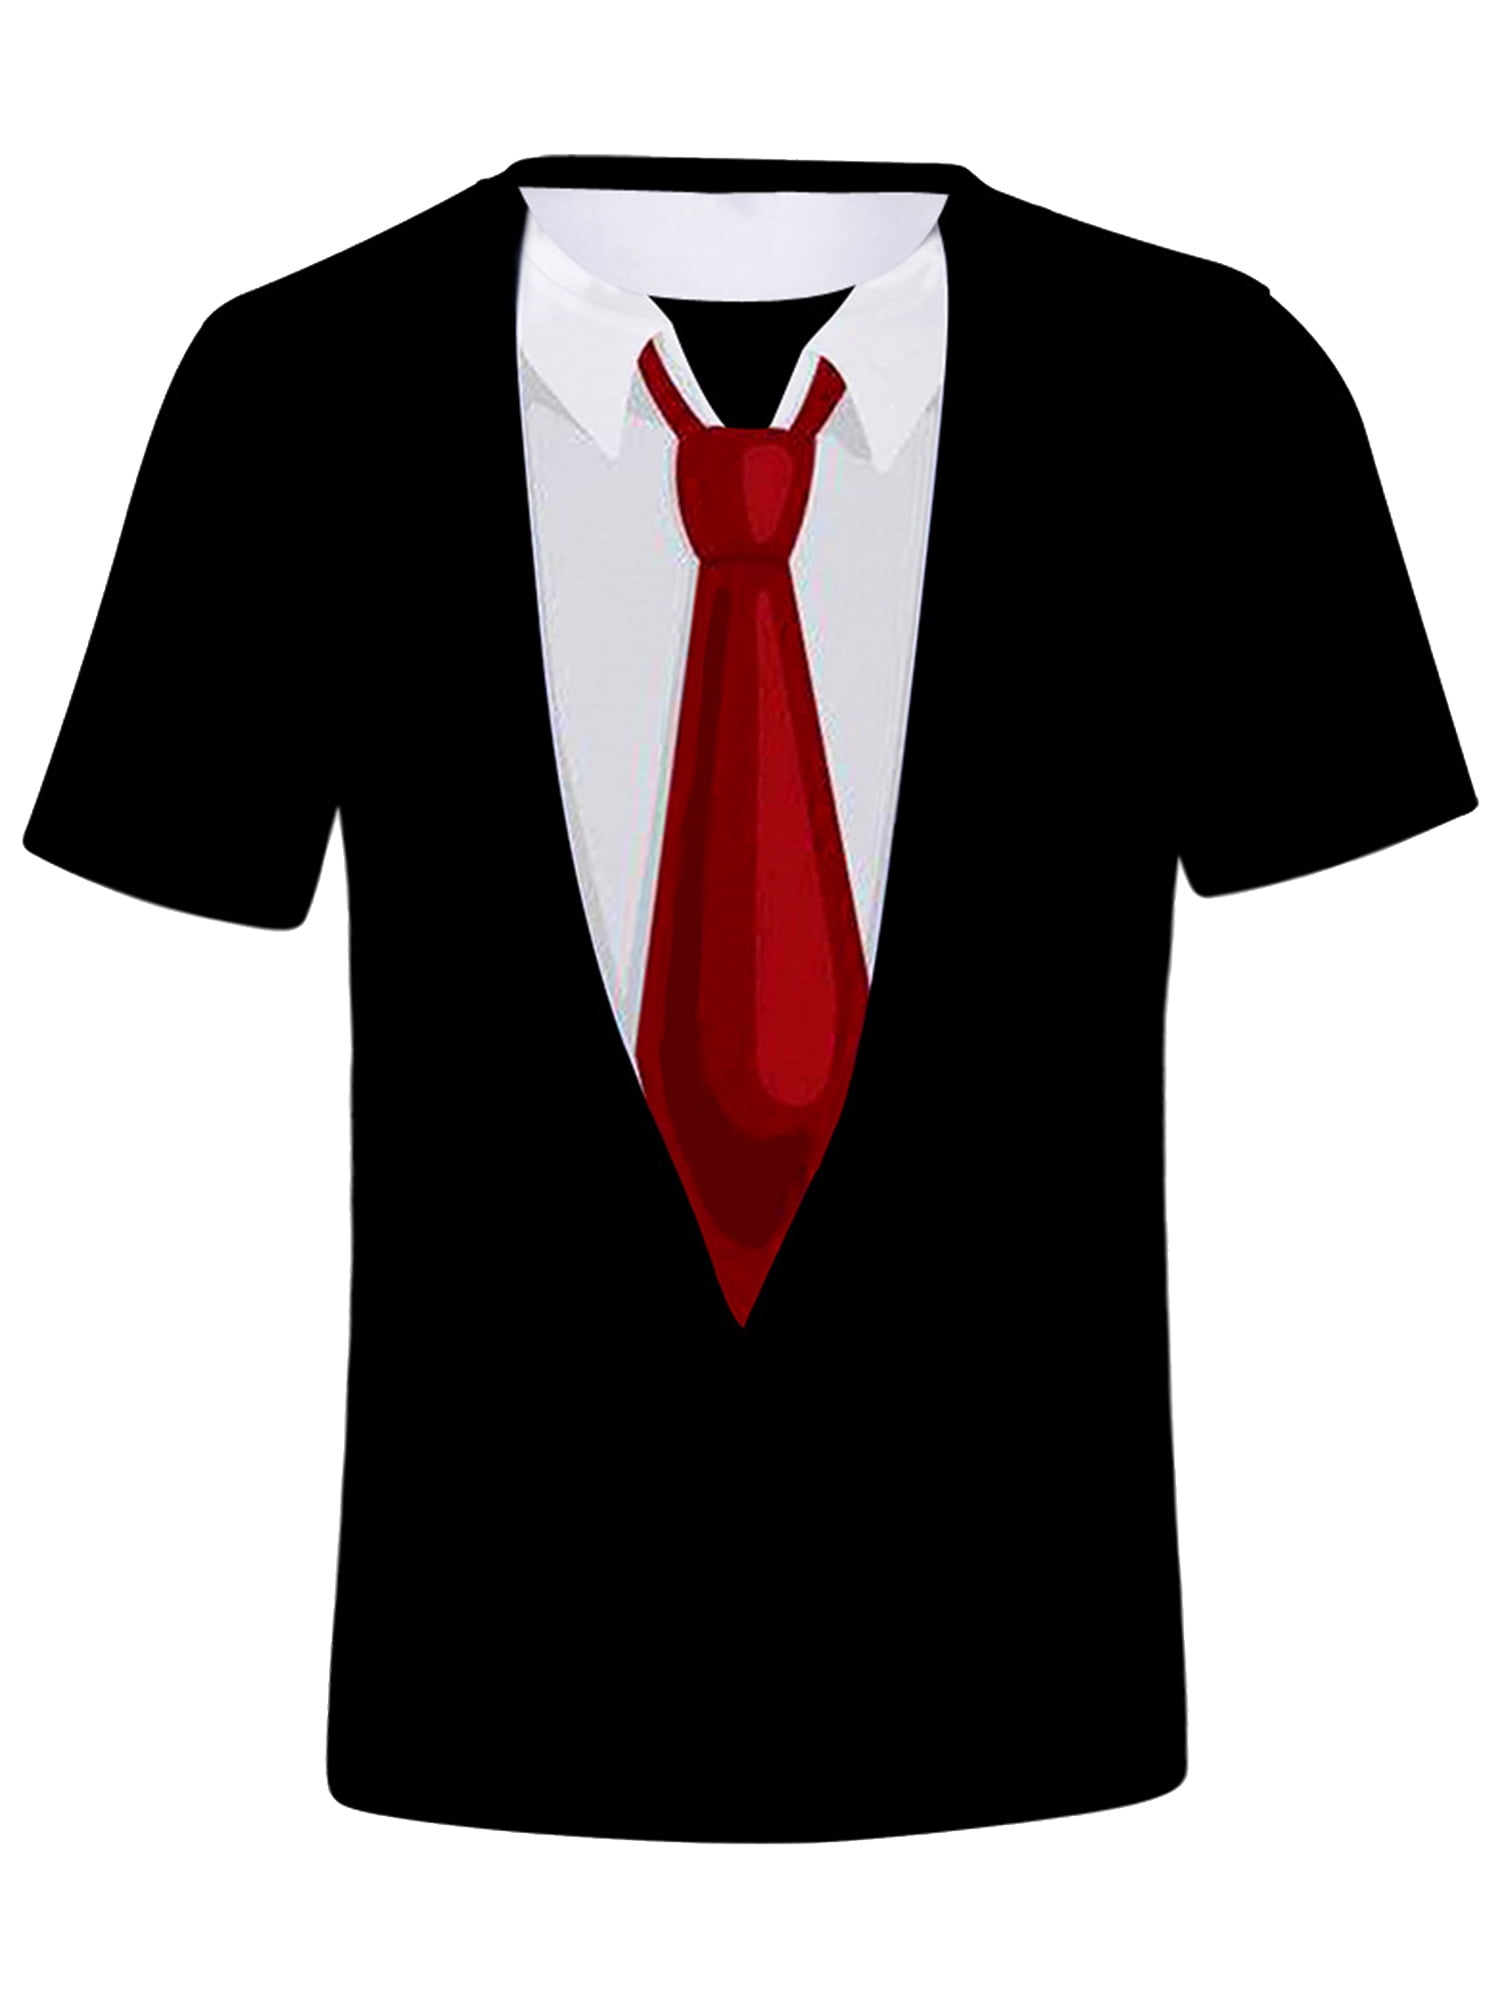 Sweater Vest black Tie Roblox Bow tie tie Tshirt necktie Template  pocket Formal wear  Anyrgb